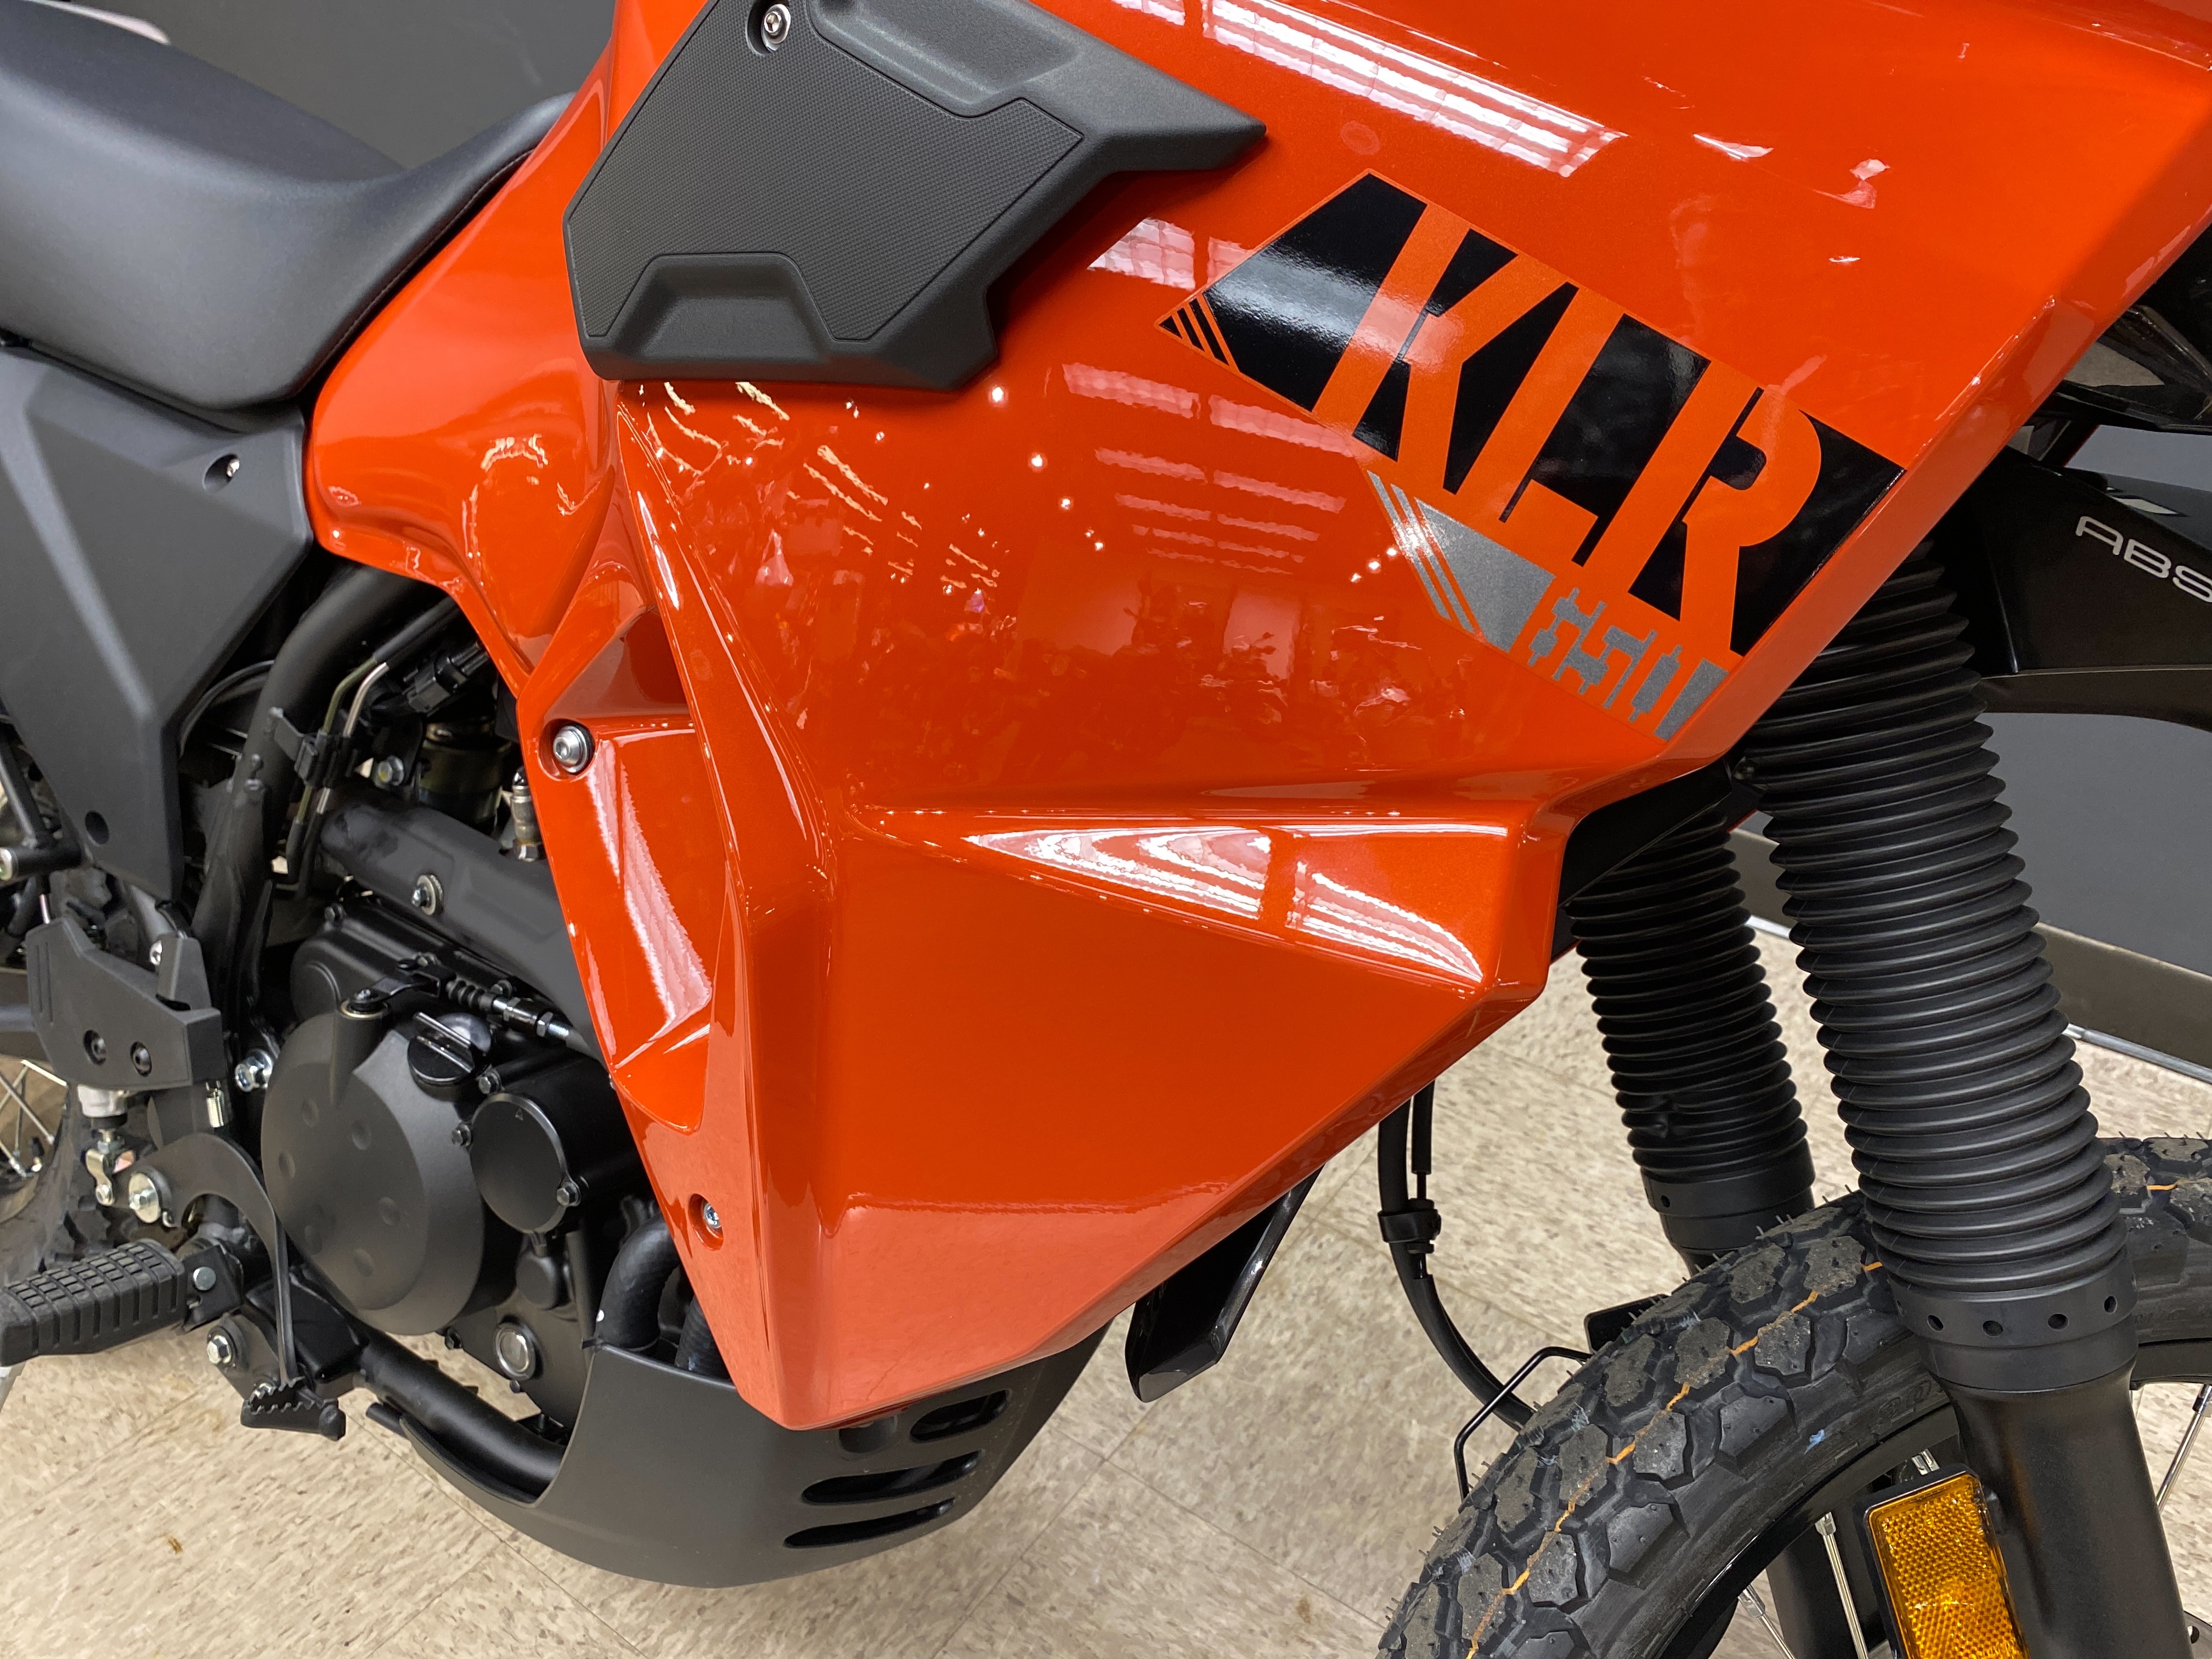 2022 Kawasaki KLR 650 Traveler at Sloans Motorcycle ATV, Murfreesboro, TN, 37129